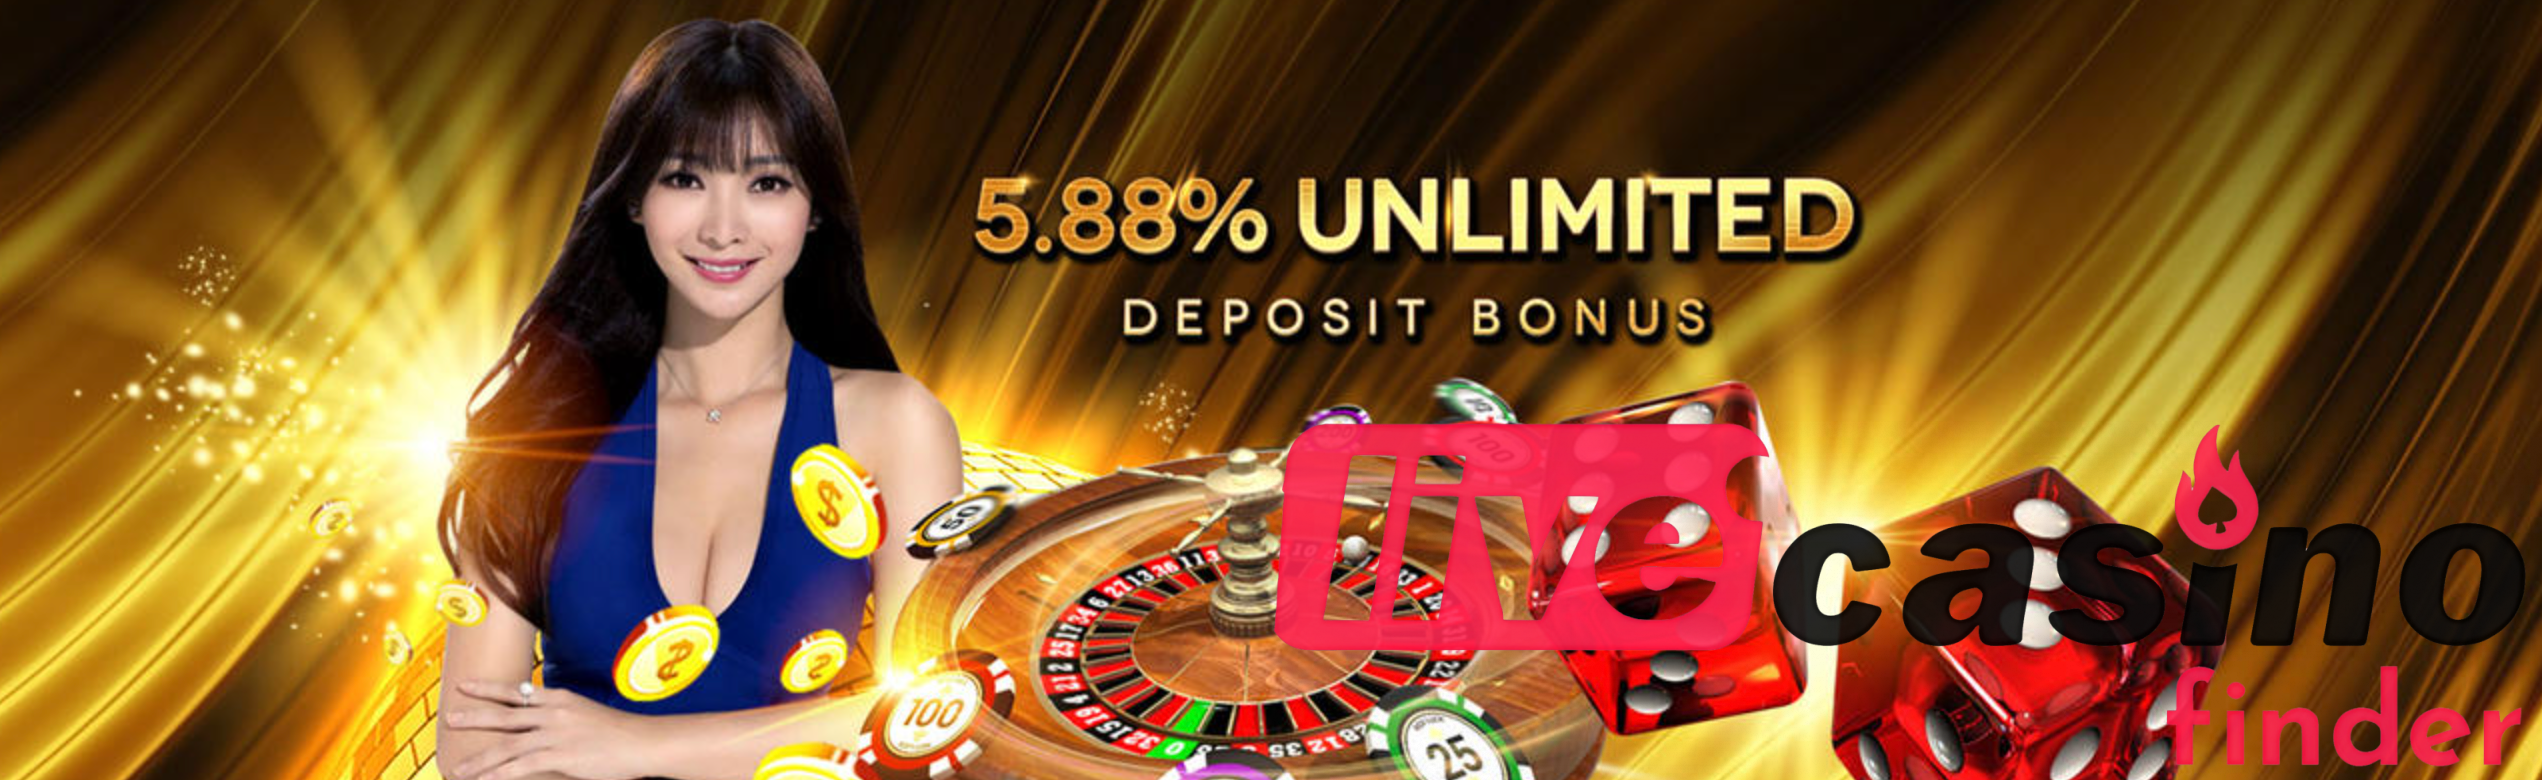 Deposit Bonus Japan Live Casinos.